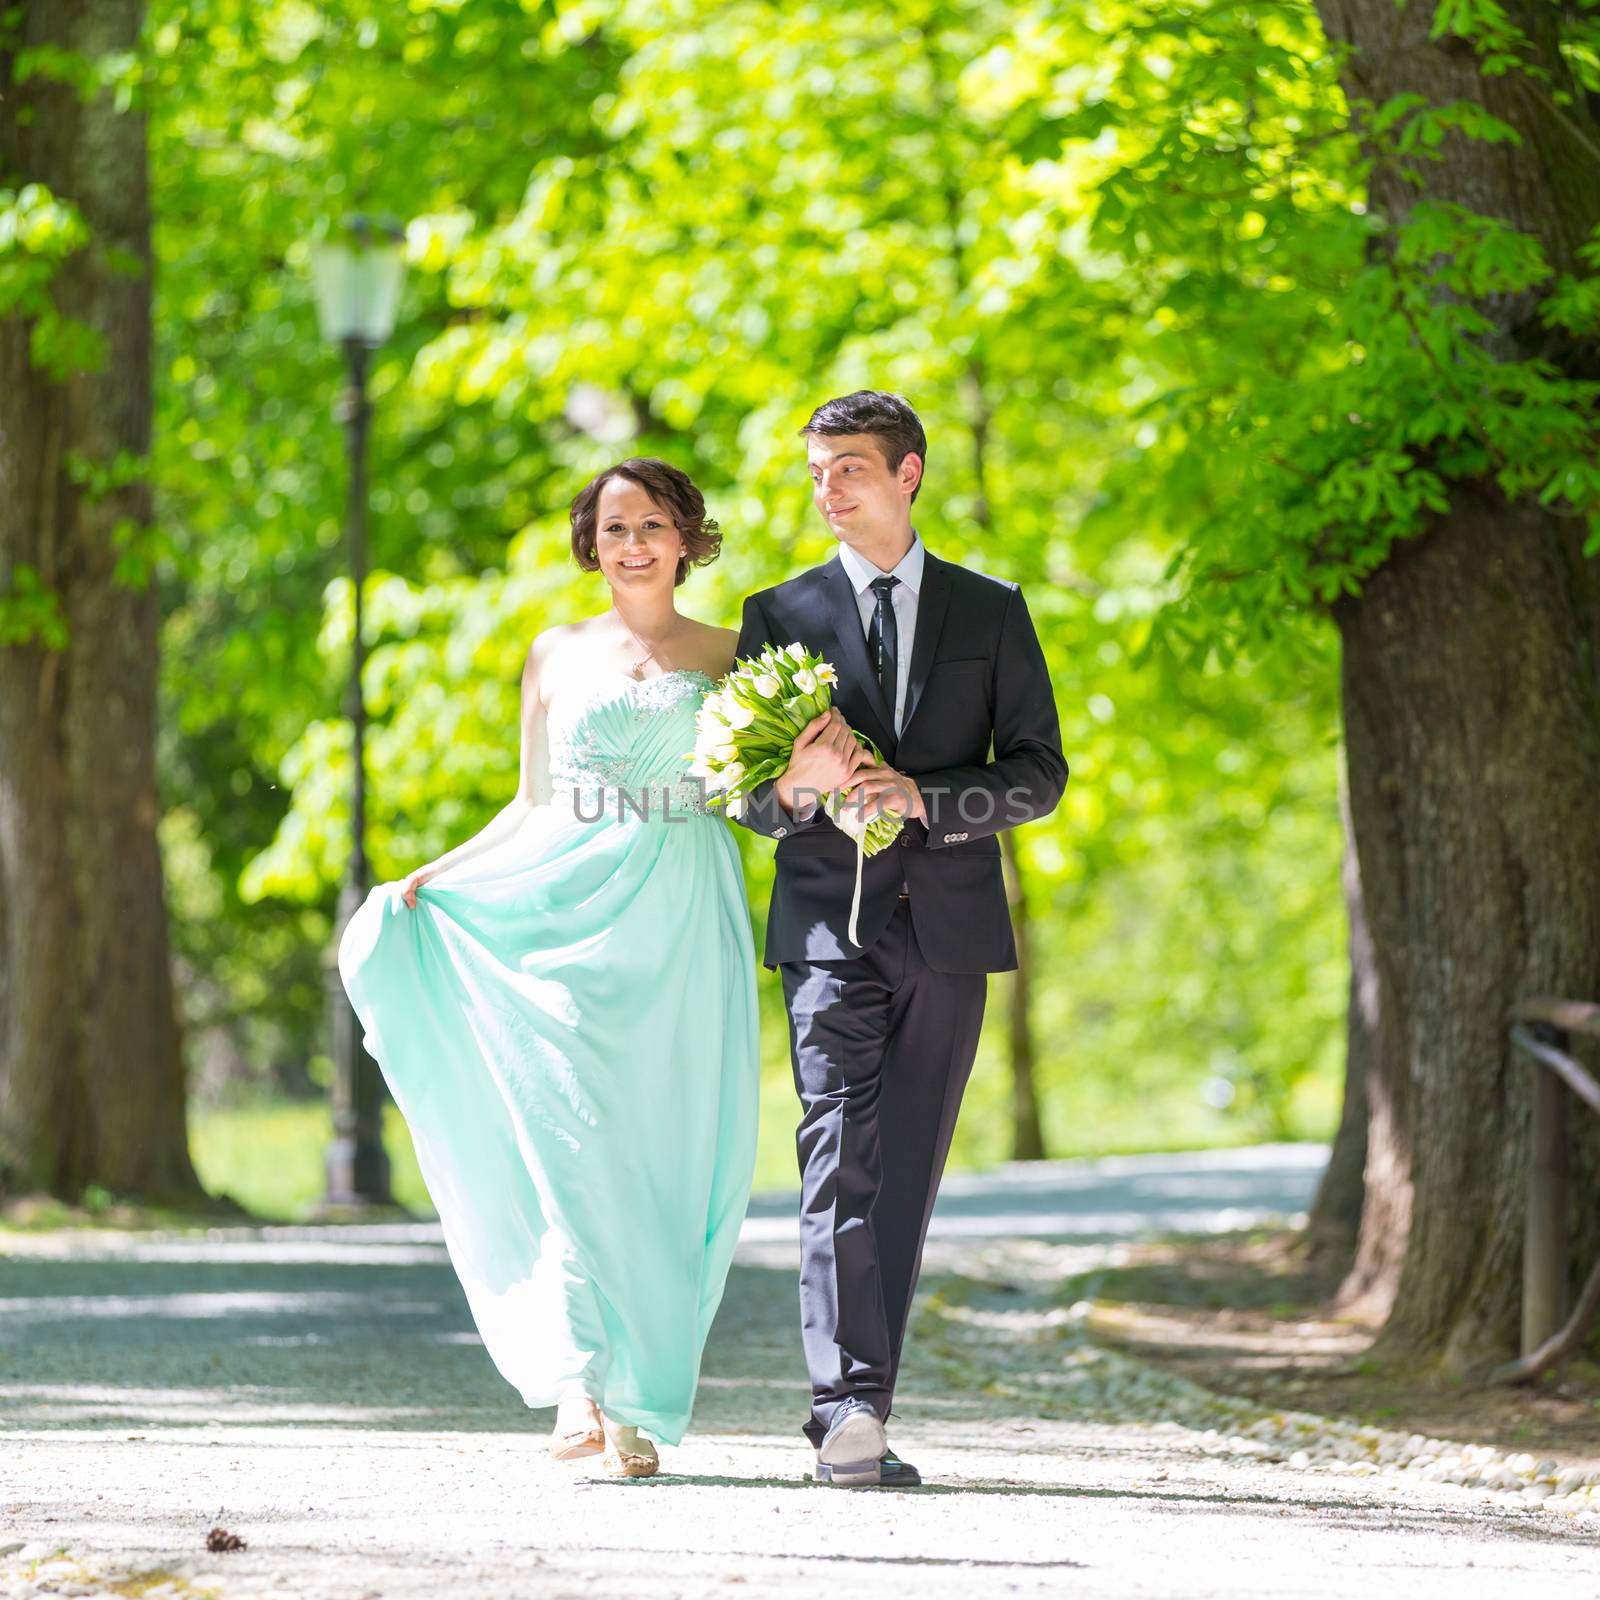 Wedding couple walking in park. by kasto